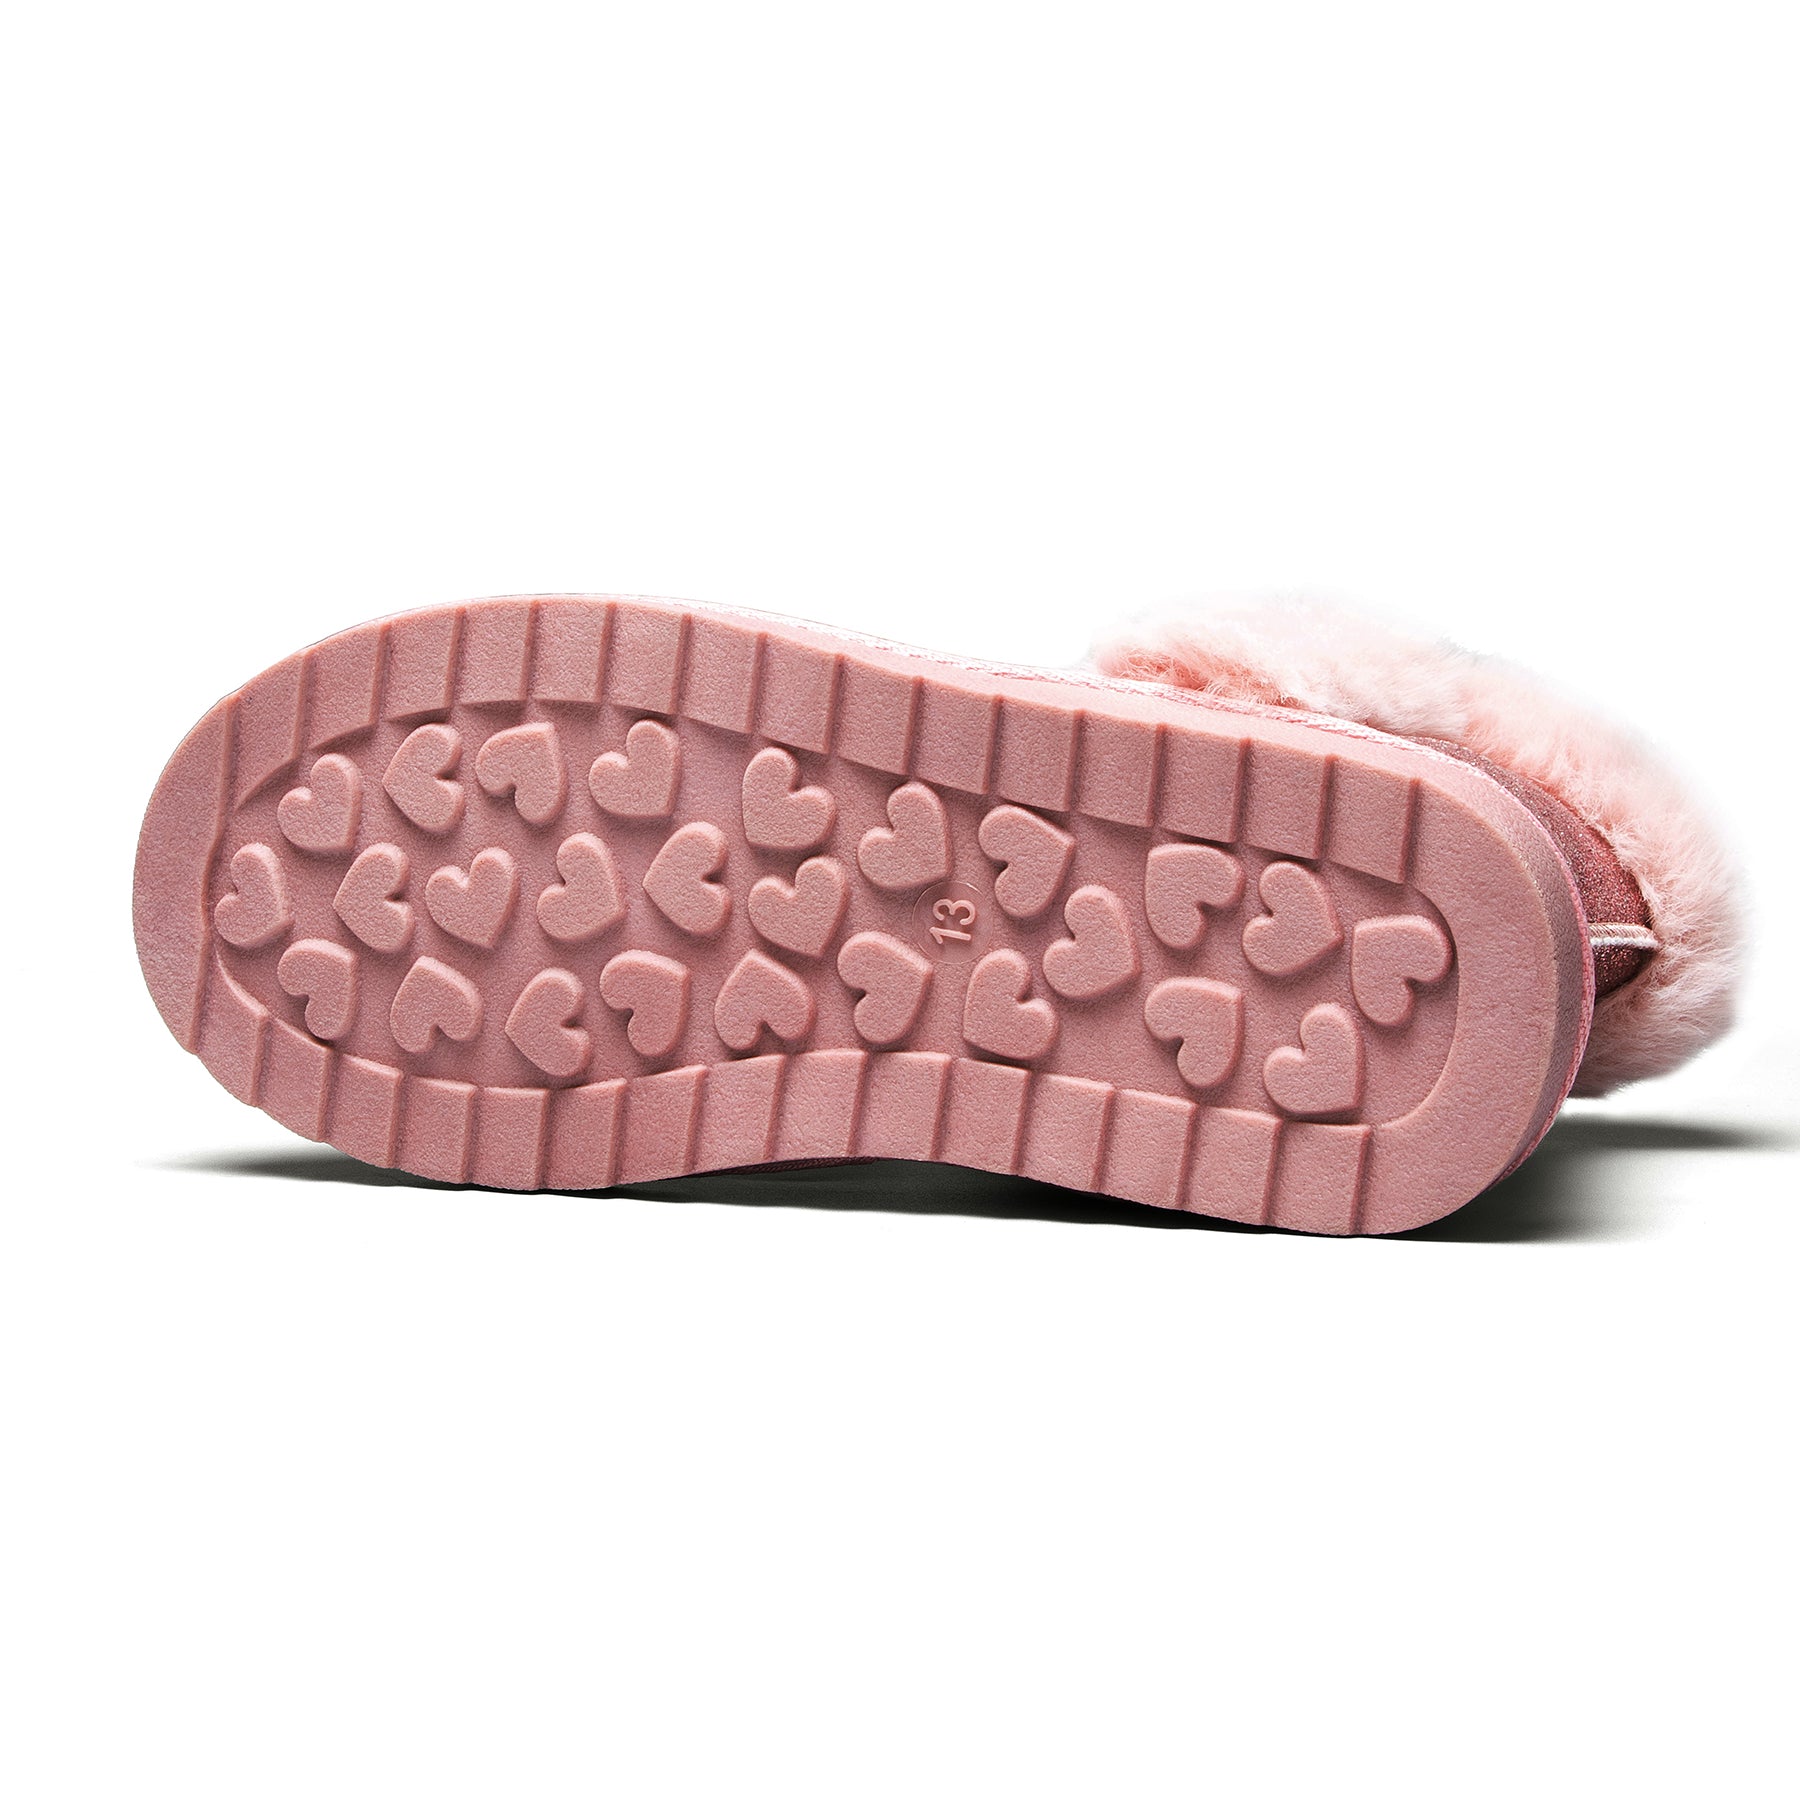 Pink/Silver Glitter Winter Warm Snow Boots - MYSOFT